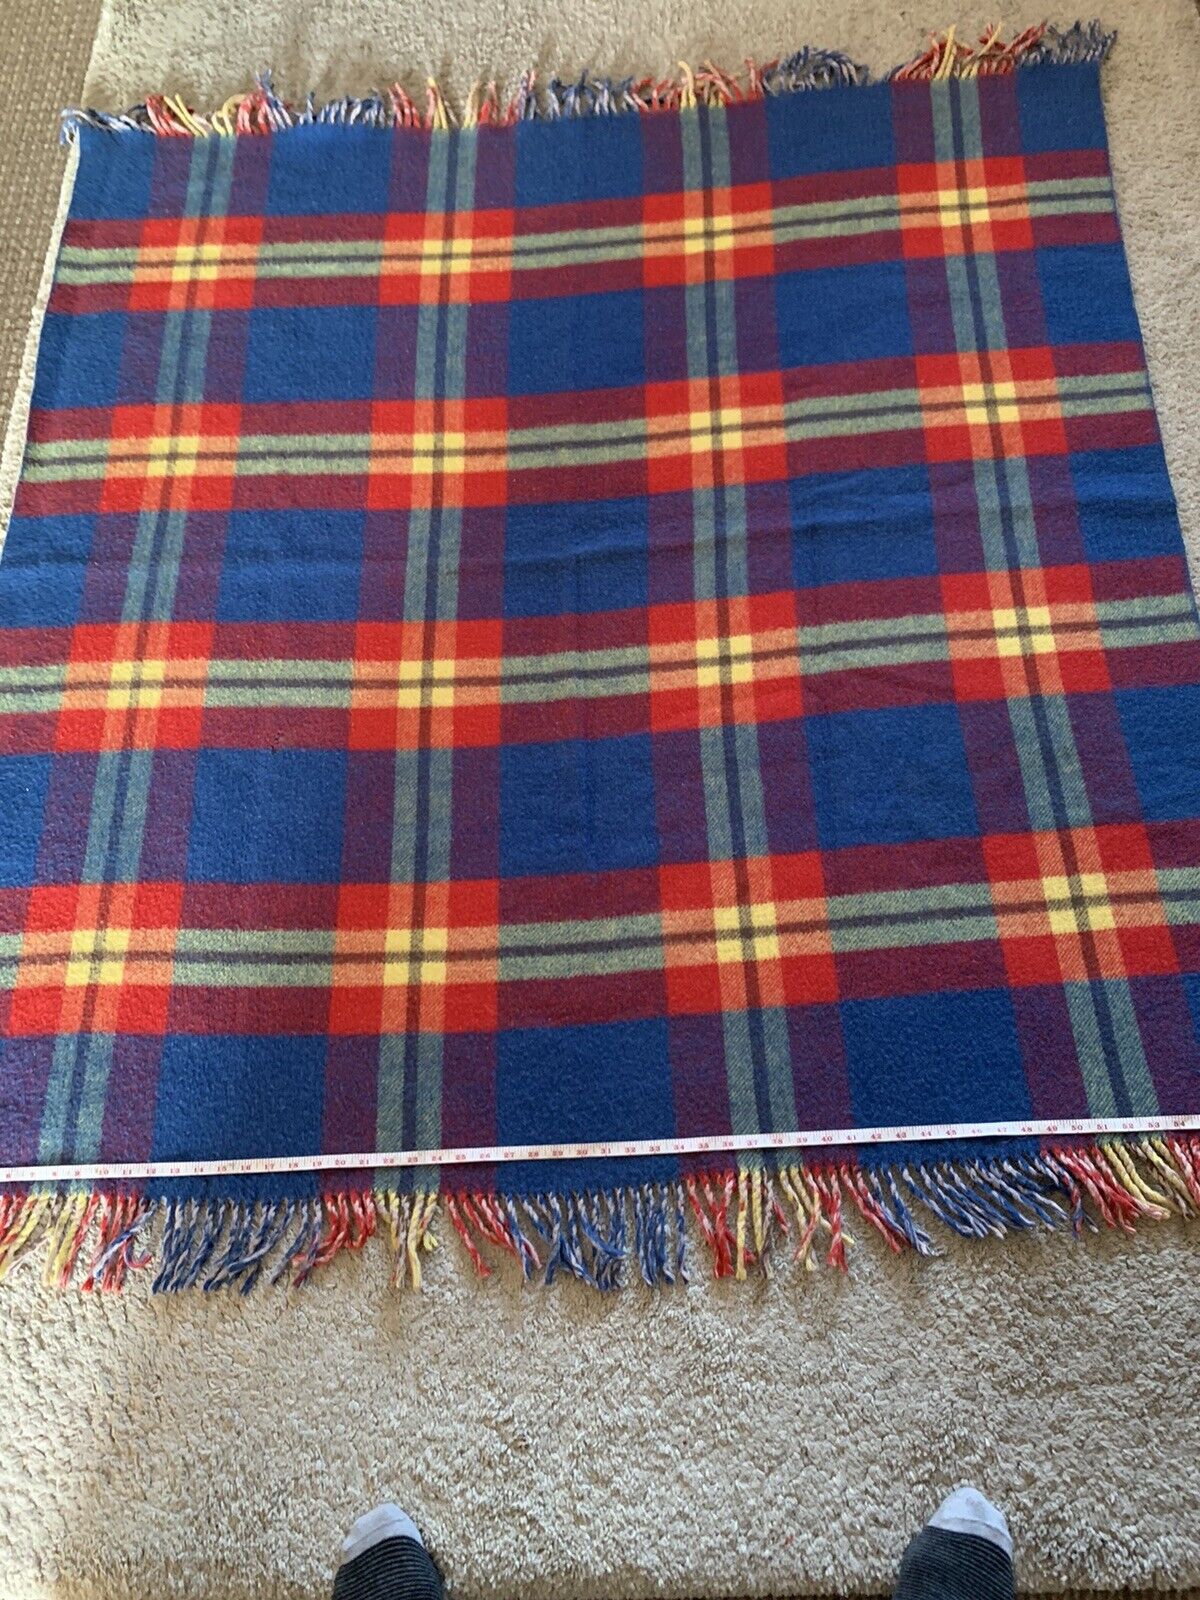 Derw Welsh Wool Single Blanket Vintage Handmade 62” X 60” Tartan Check Fringed